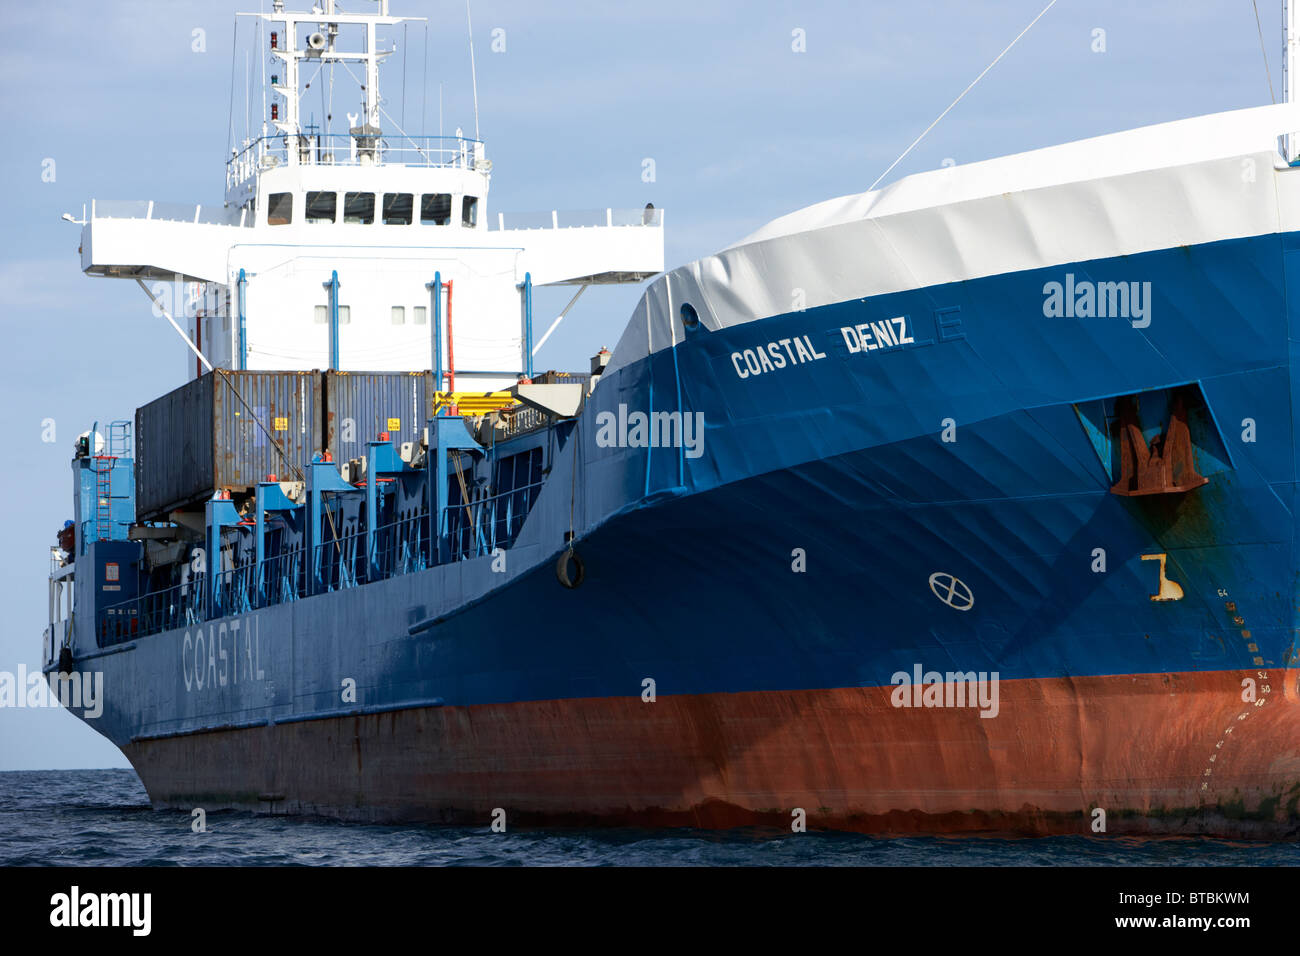 coastal deniz dry cargo hazard a major ship at anchor in coastal waters of  the uk Stock Photo - Alamy